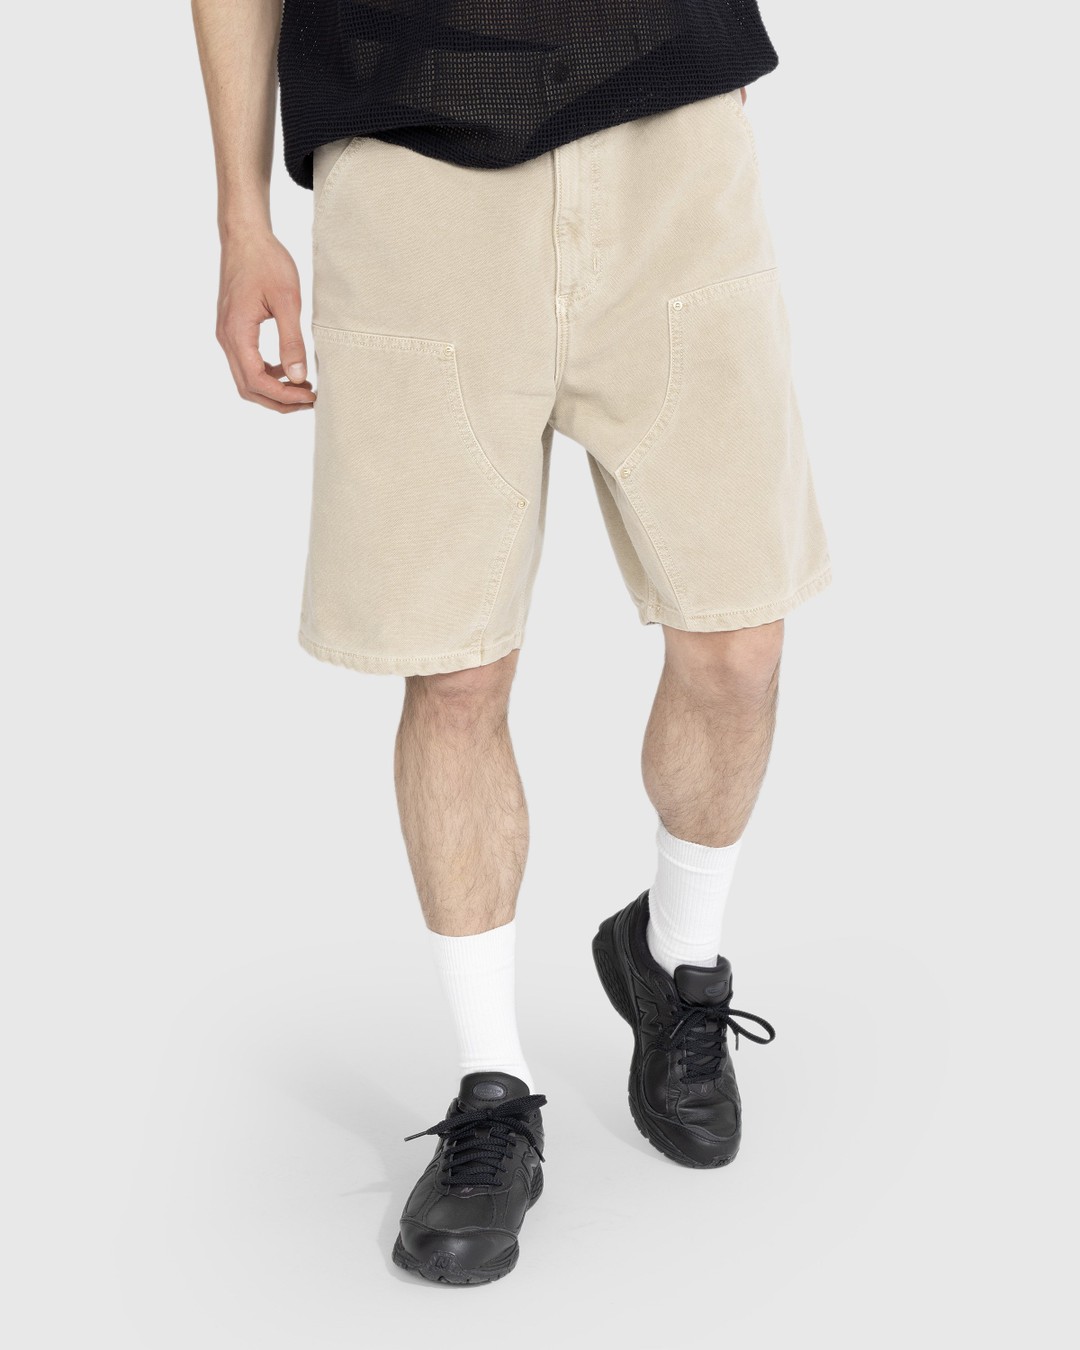 Carhartt WIP – Double Knee Short Brown - Shorts - Brown - Image 2